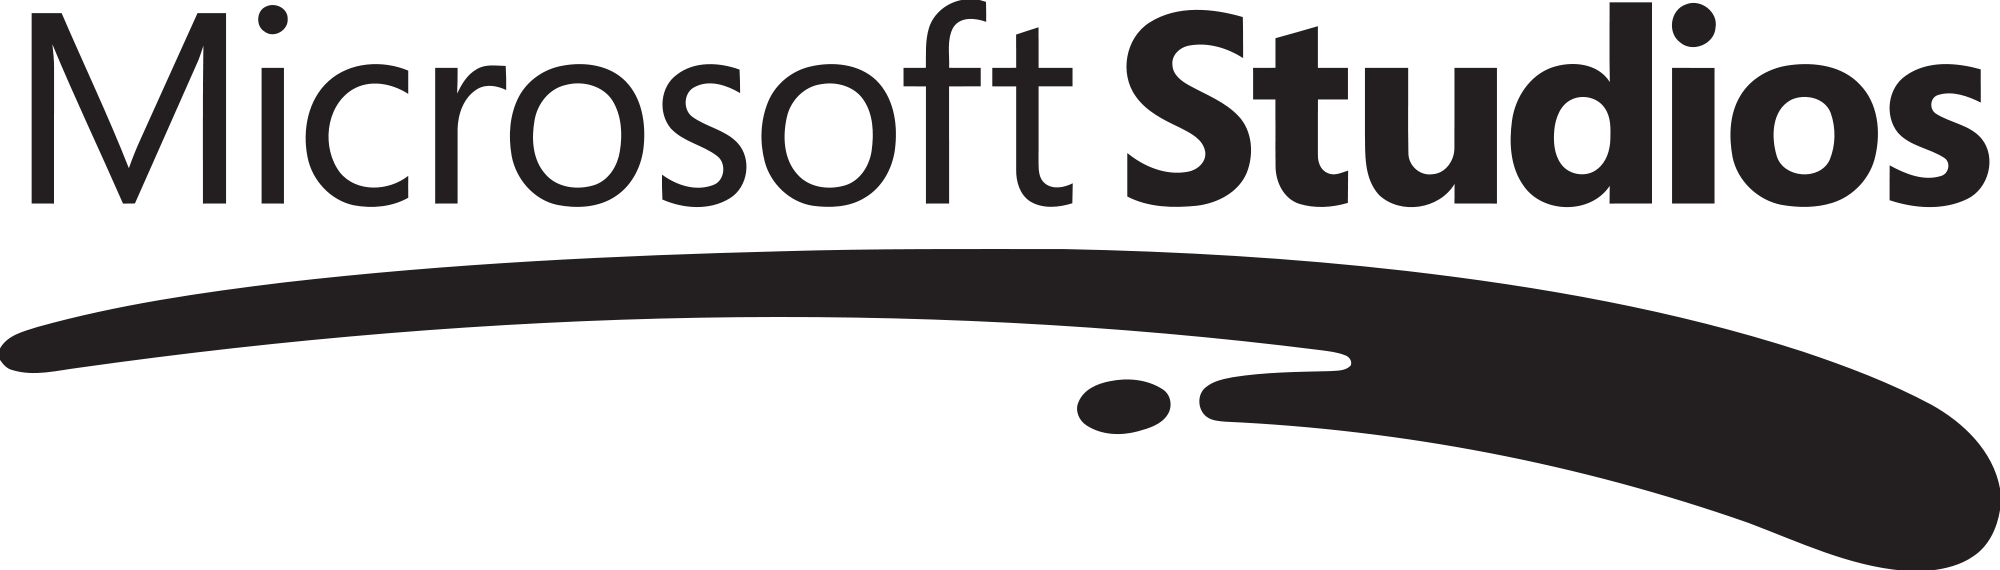 Microsoft Studios Logo - File:Microsoft Studios Logo.png - Wikimedia Commons